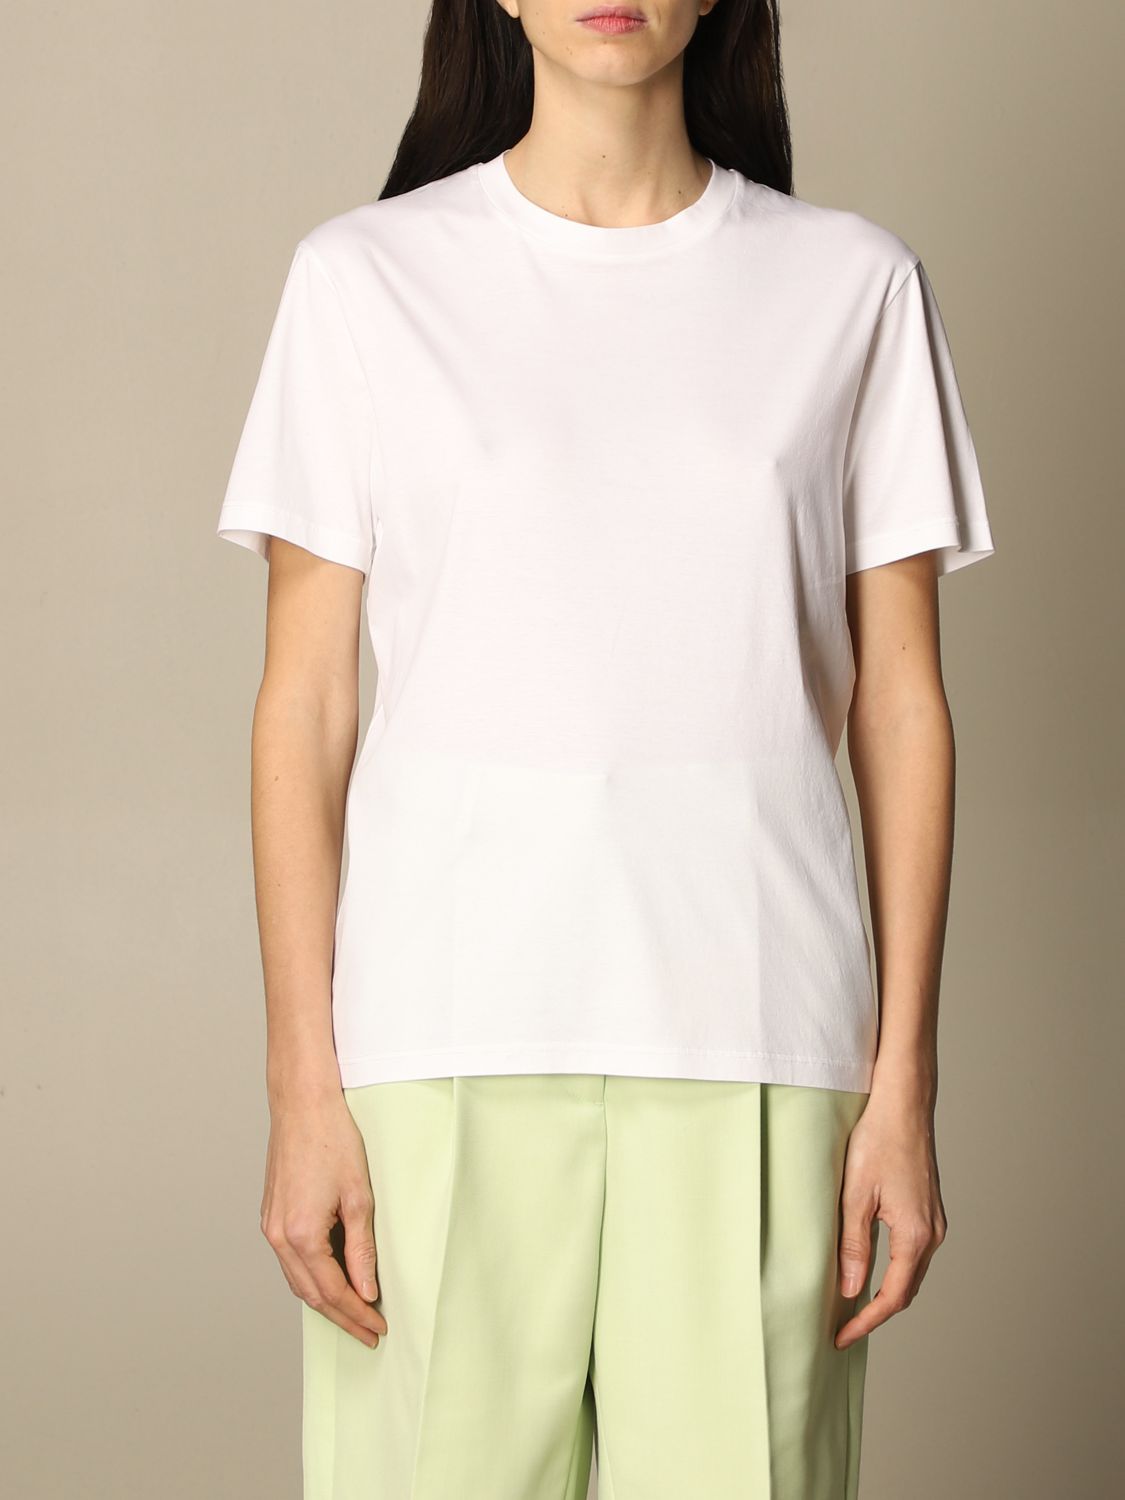 JIL SANDER: t-shirt for women - White | Jil Sander t-shirt JSPS705002 ...